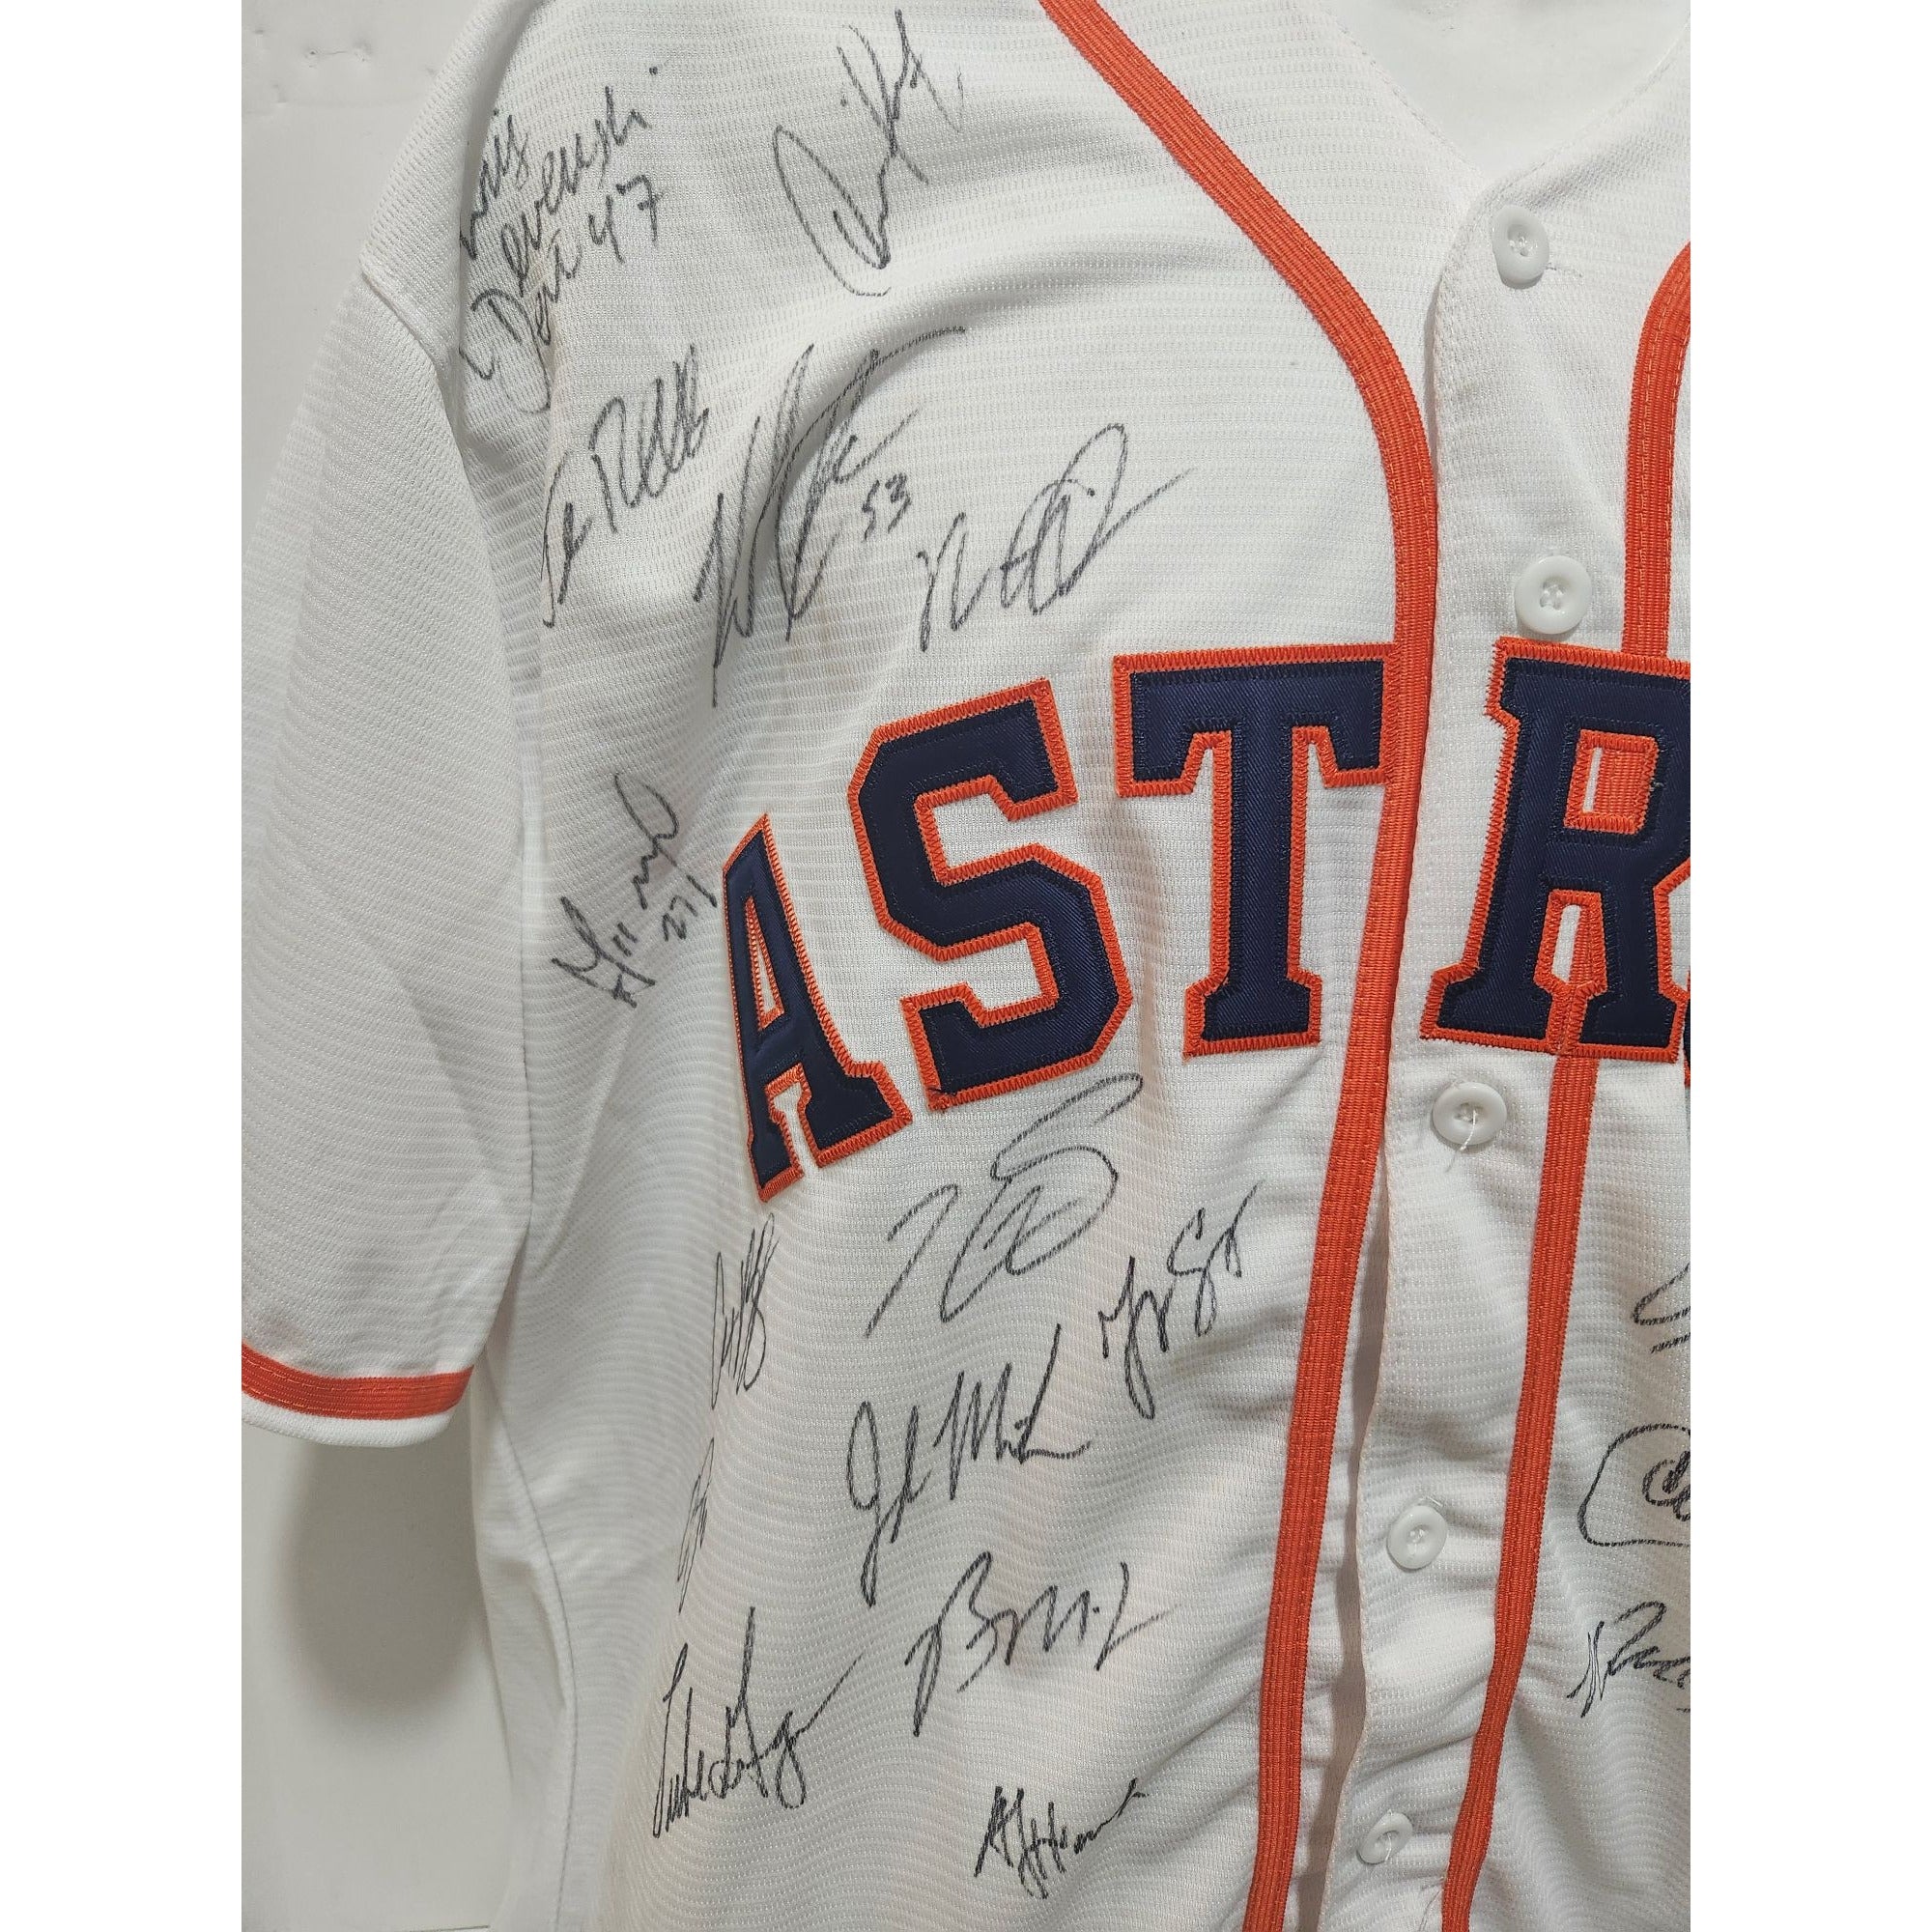 Carlos Correa Houston Astros Autographed Signed Gray #1 Custom